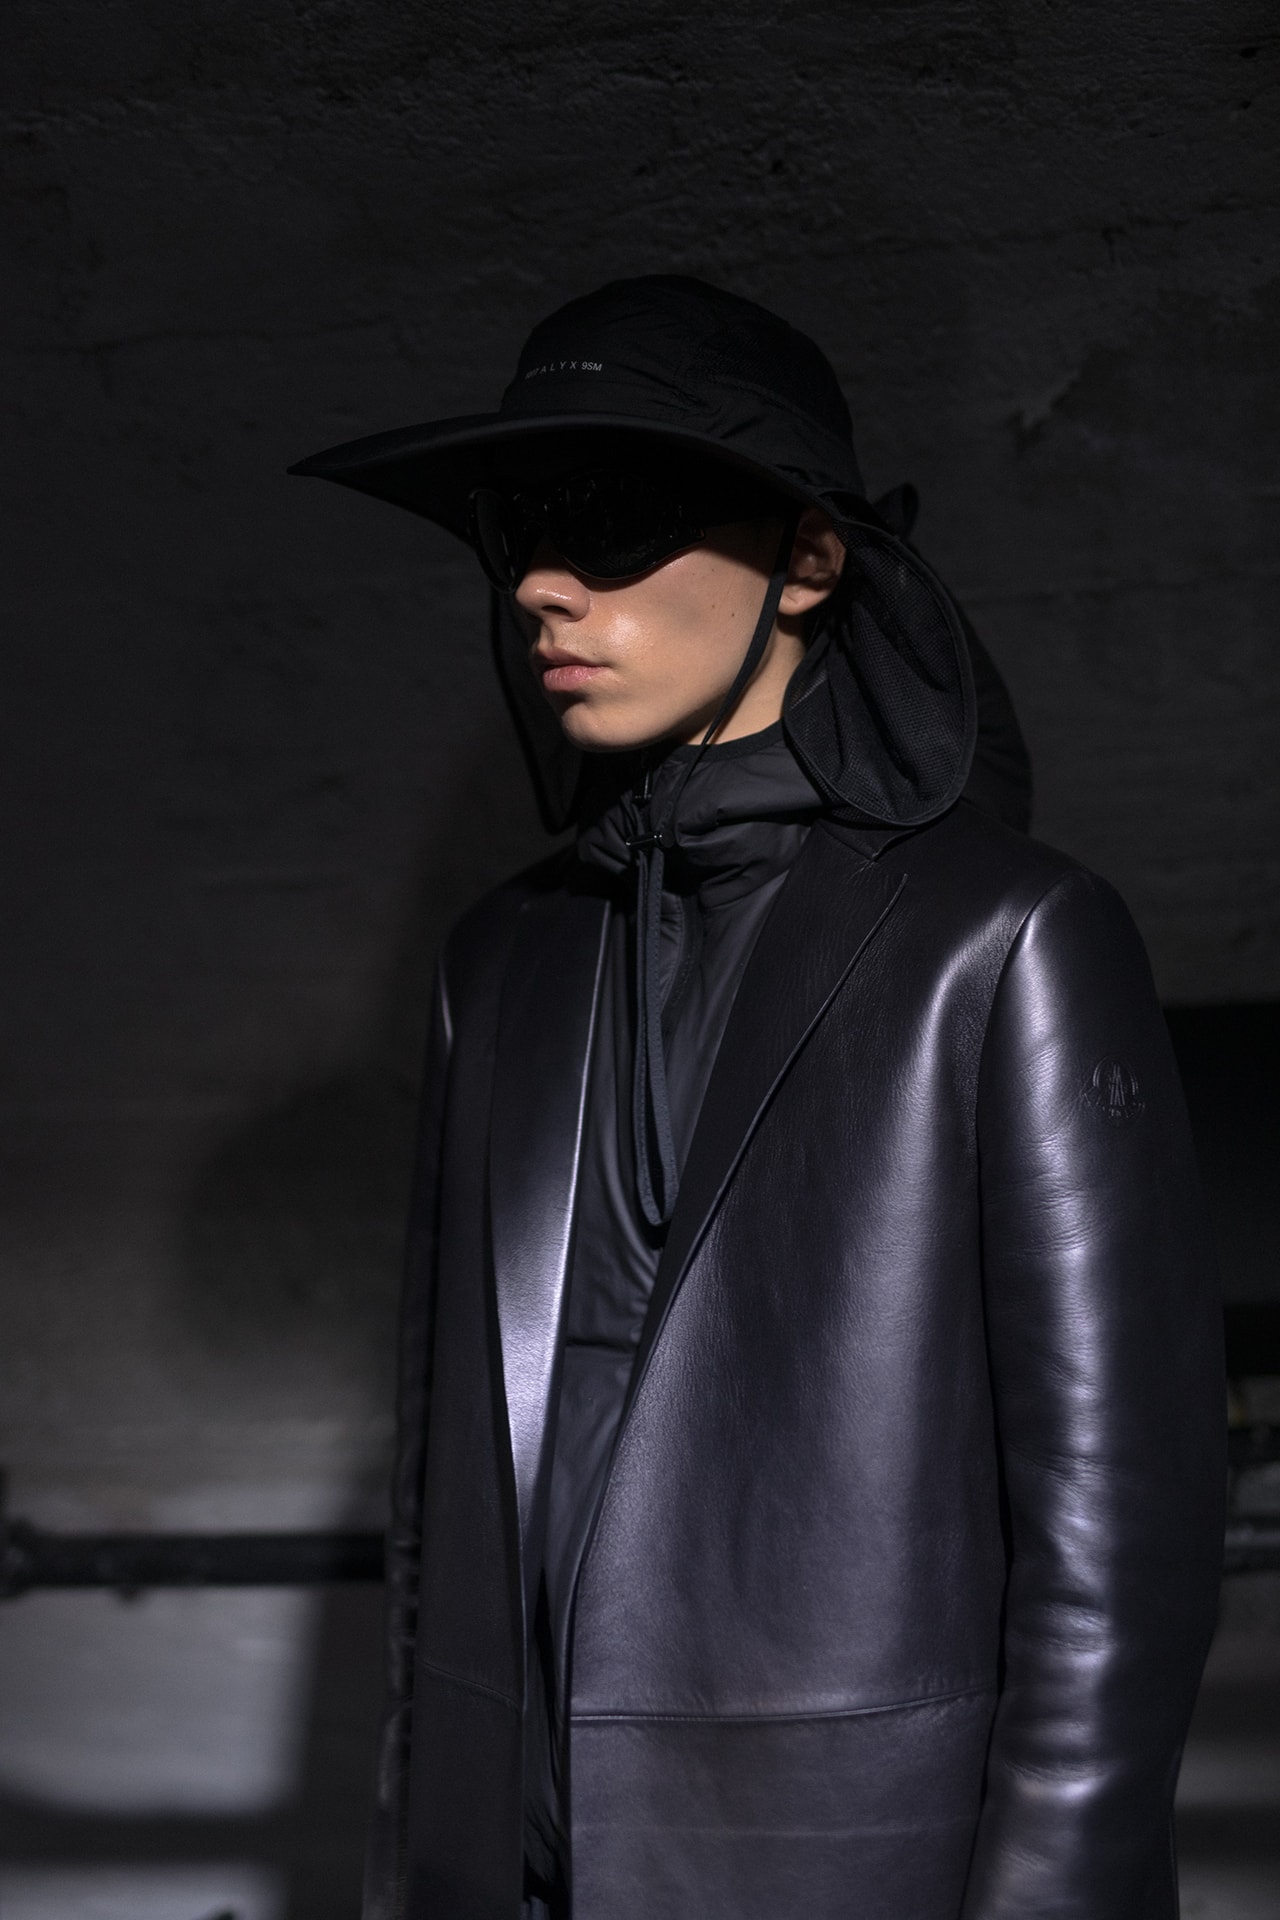 moncler genius milan fashion week presentation alyx matthew williams collaboration leather jacket black